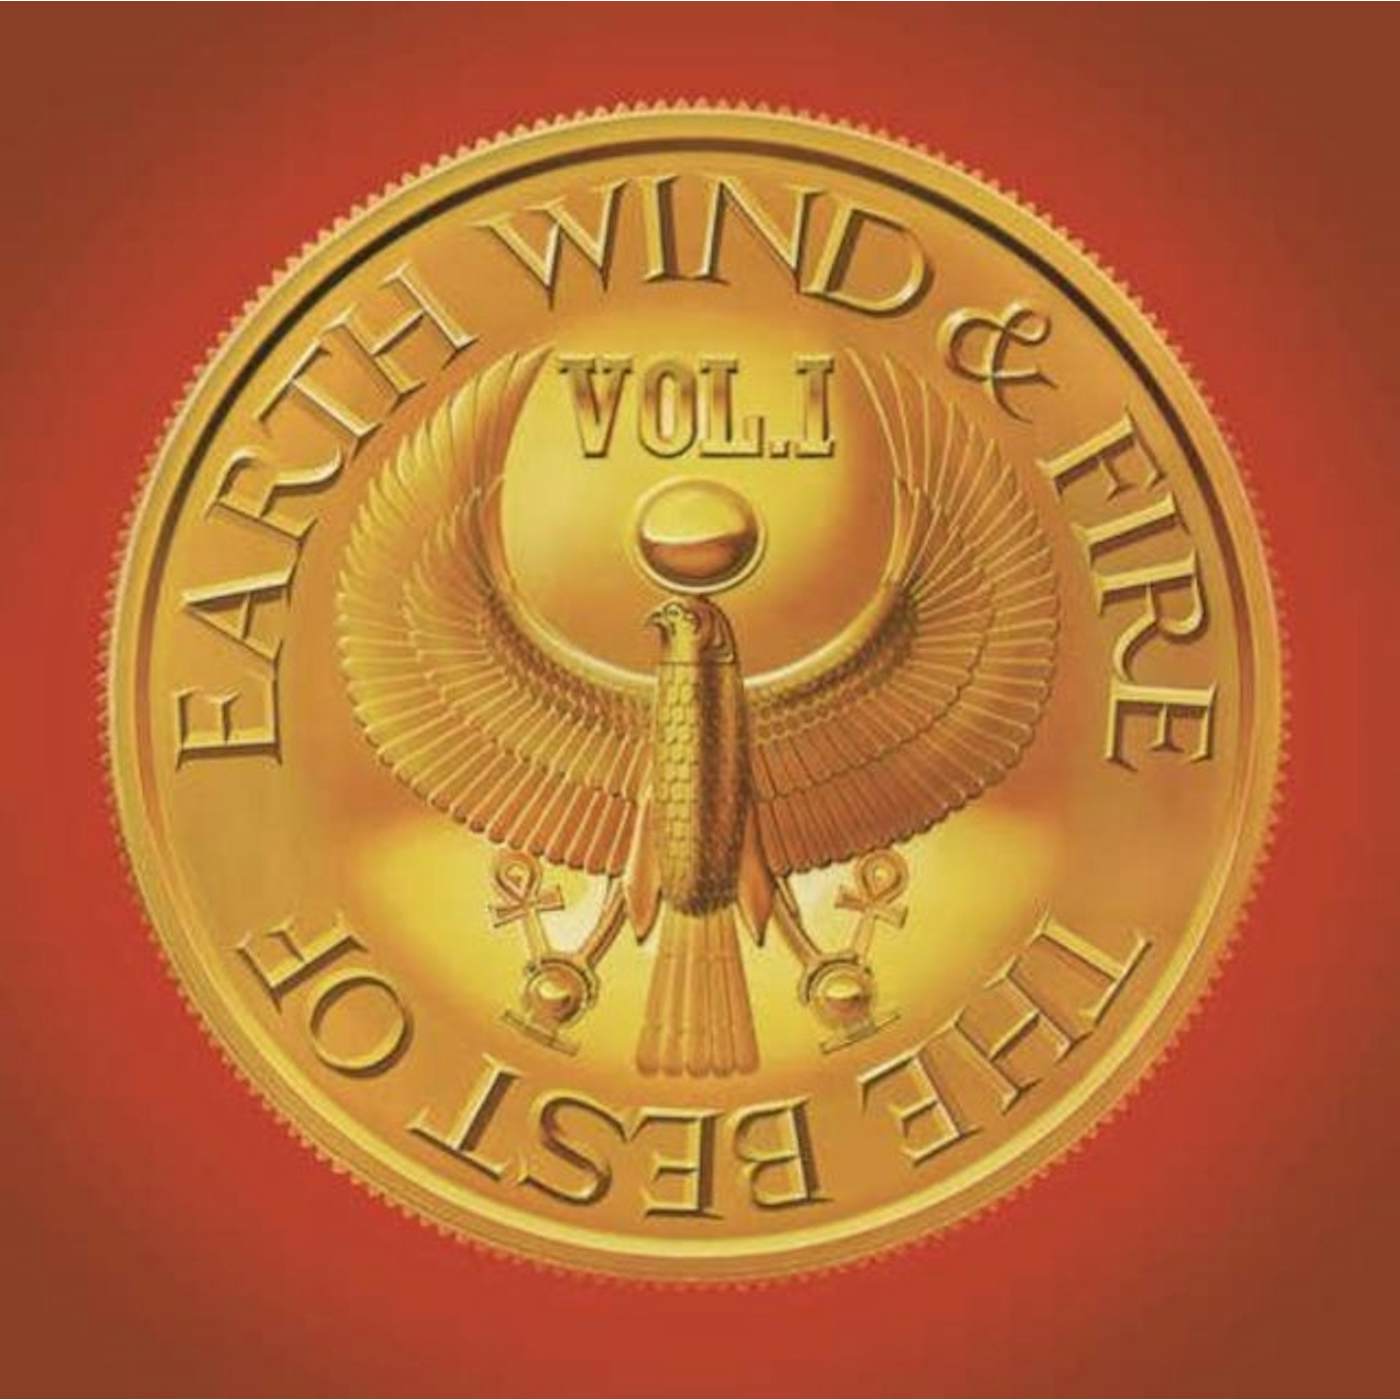 Earth, Wind & Fire LP - Greatest Hits - Vol 1 (1978) (Vinyl)